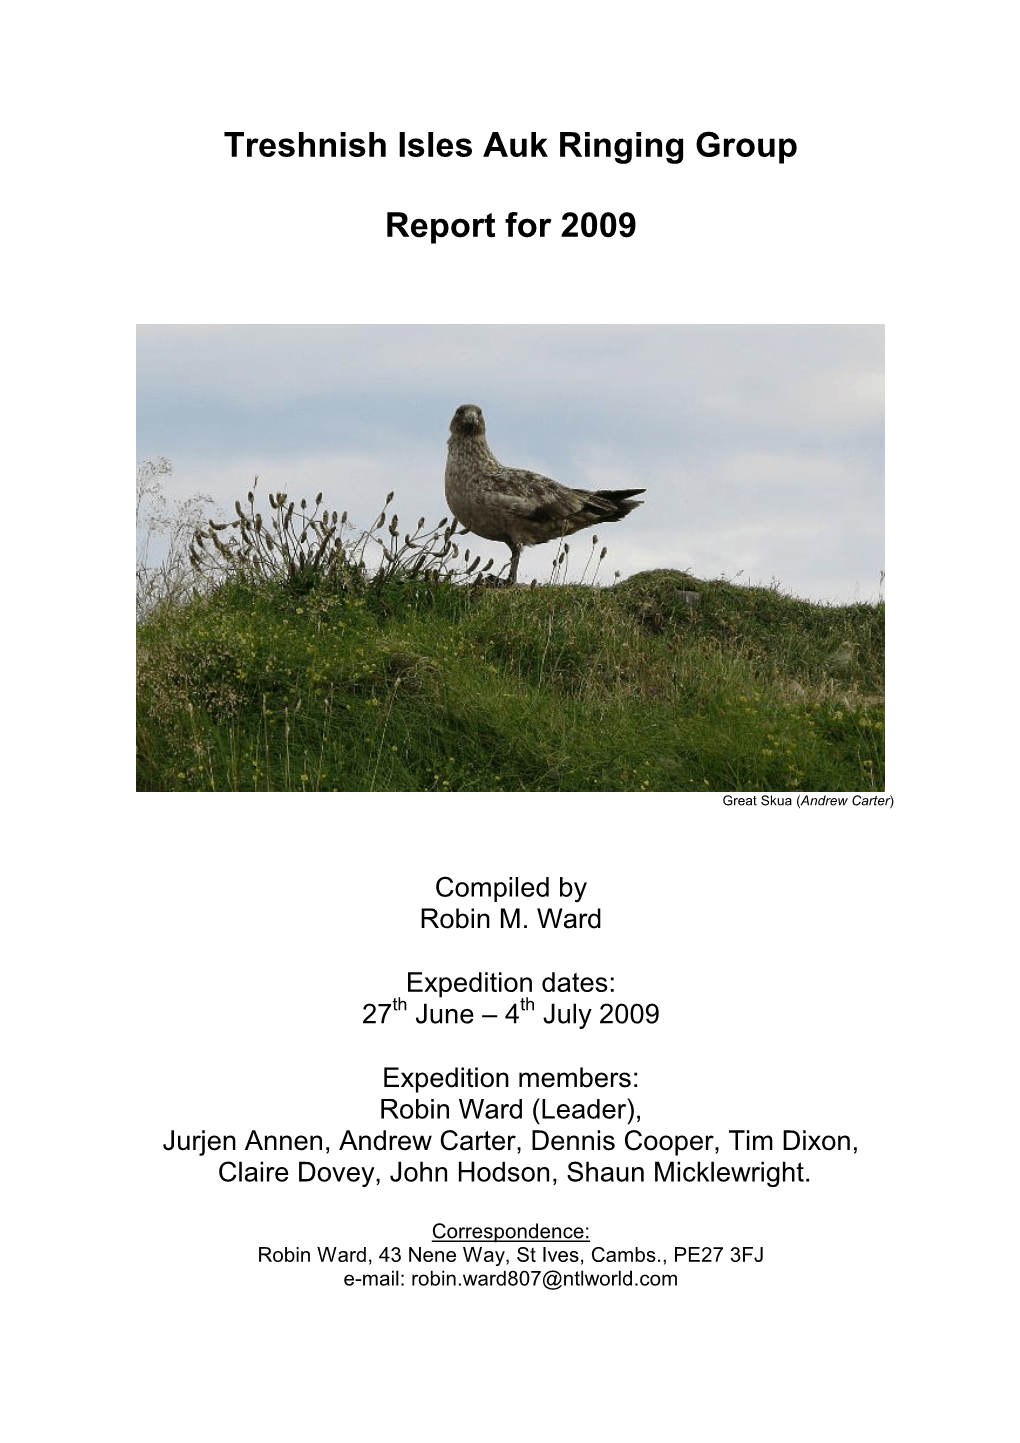 Treshnish Isles Auk Ringing Group Report for 2009